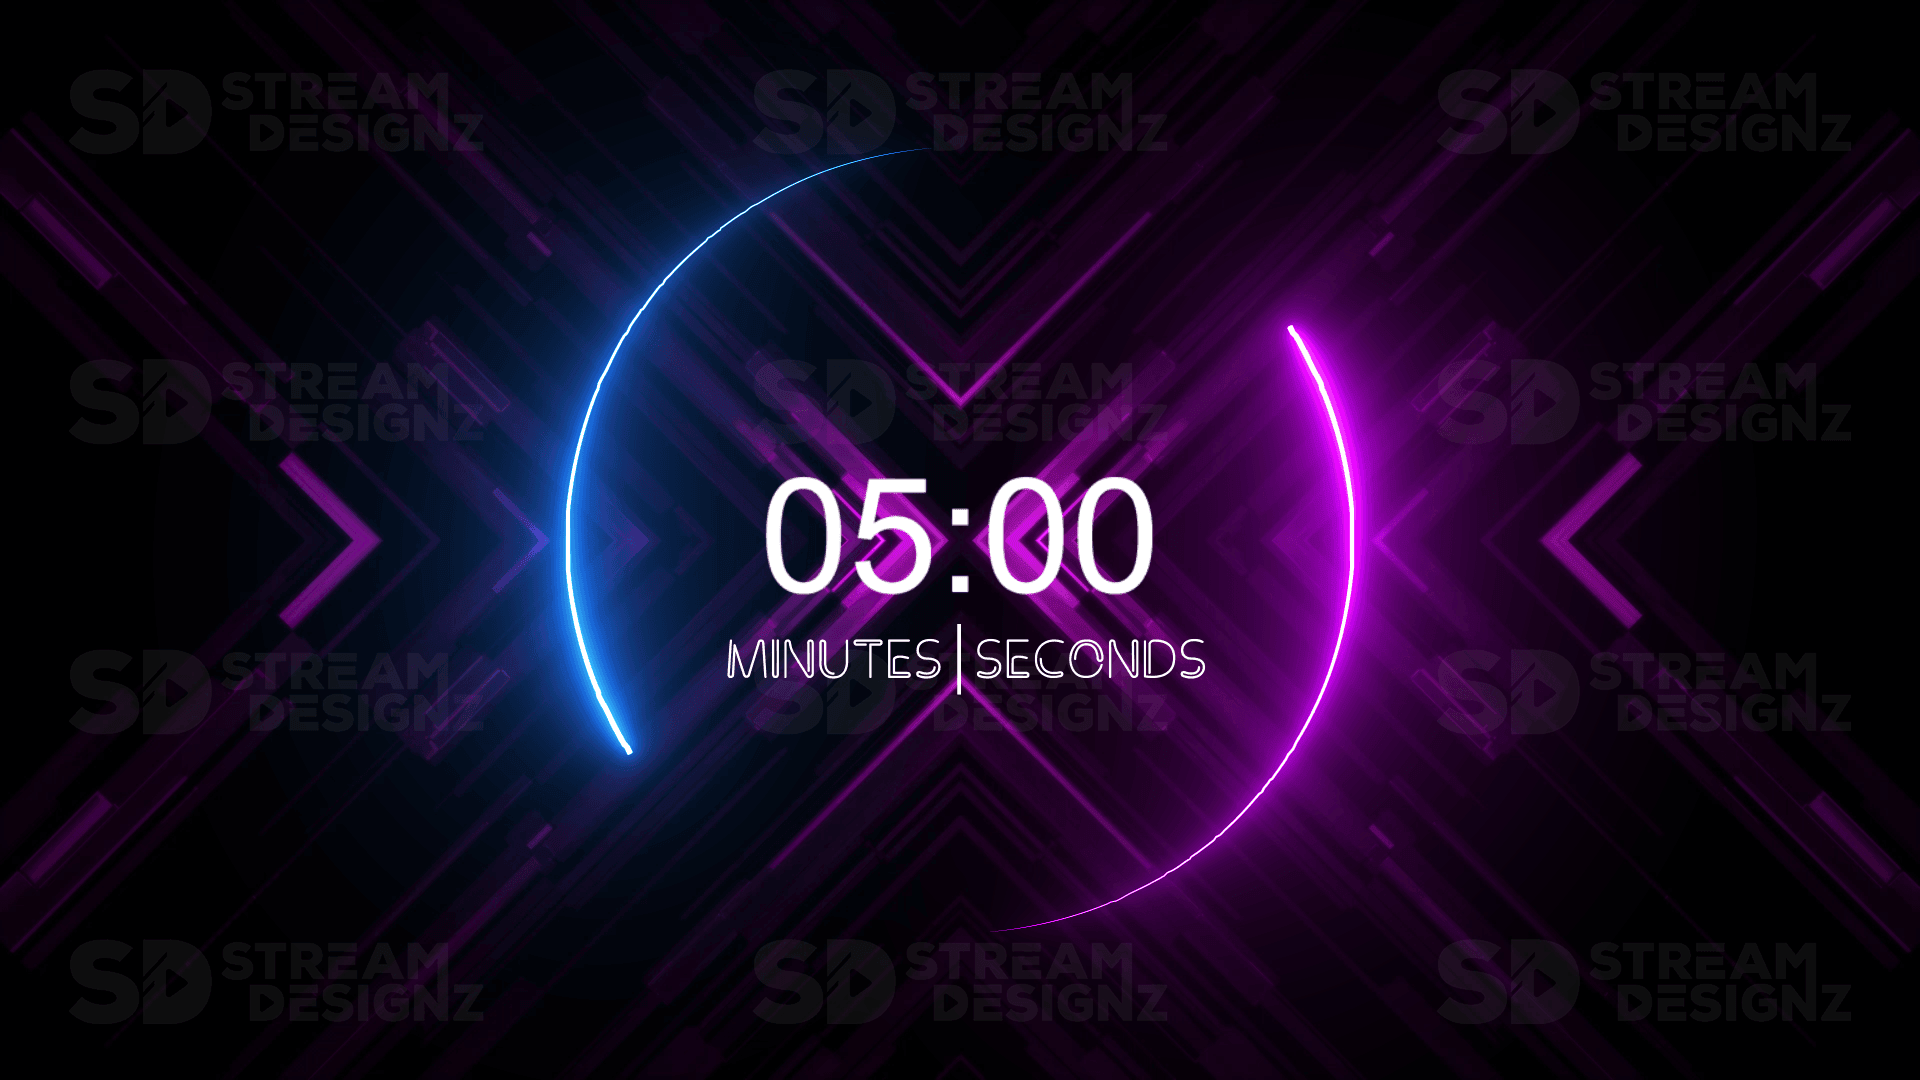 Stream Countdown Timer Overlay - Illuminate | Stream Designz